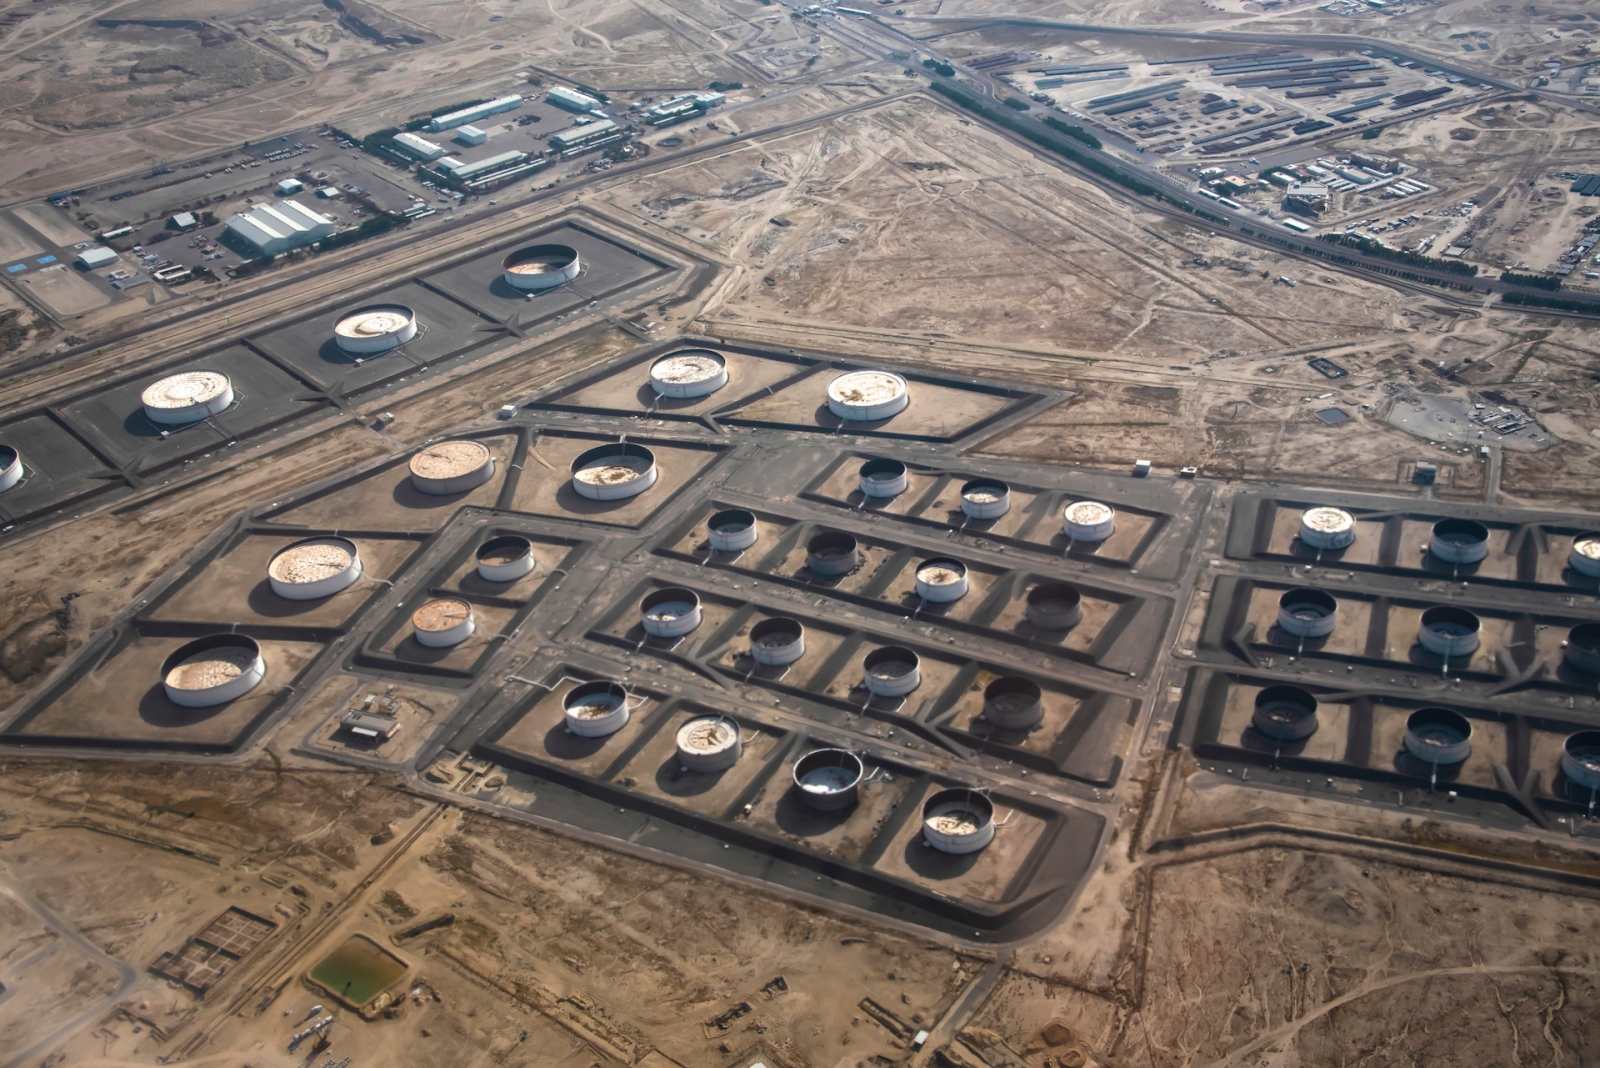 Strutture per la produzione e l'esportazione di petrolio in Kuwait